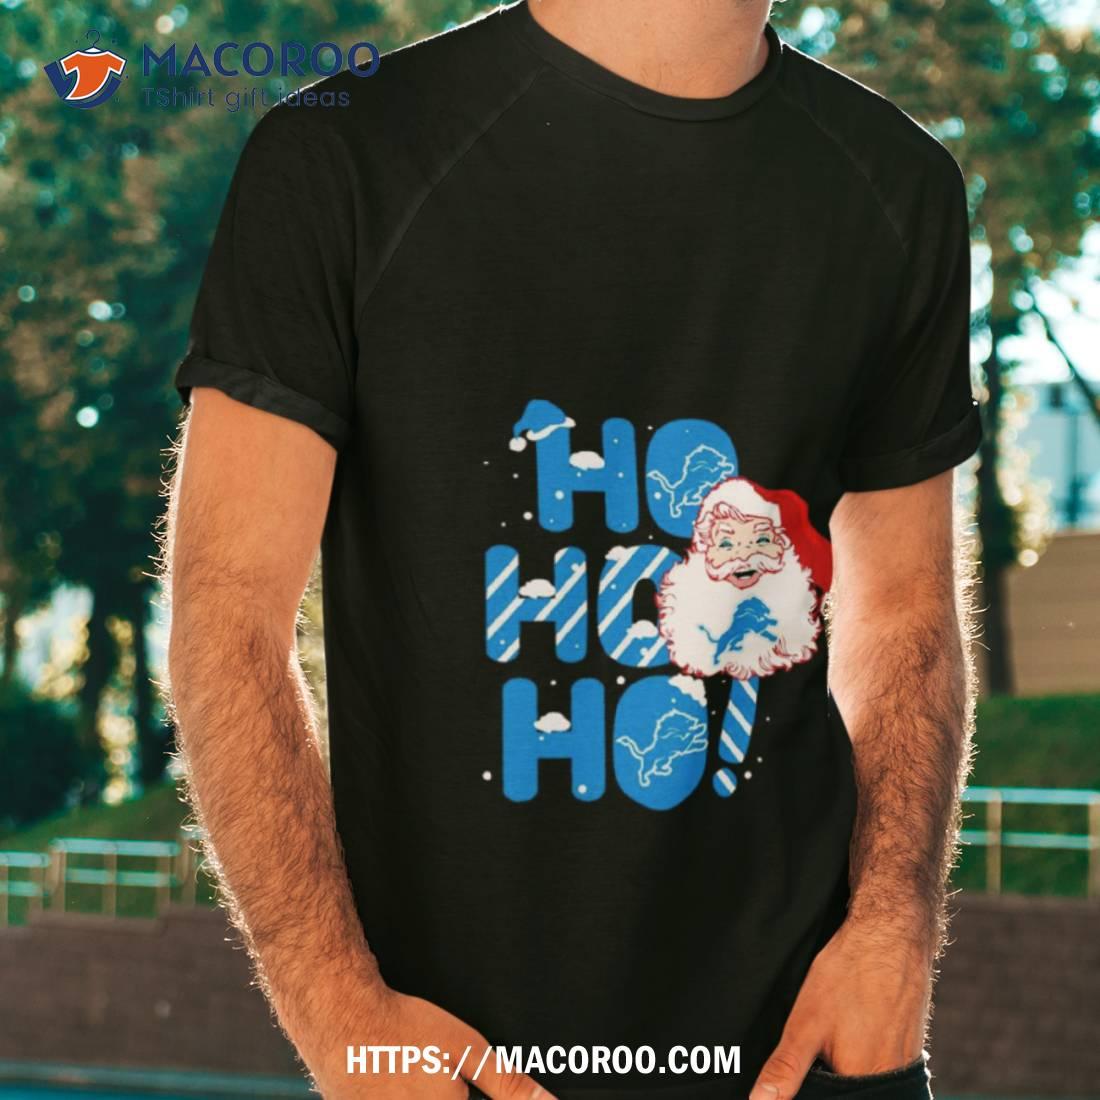 Still No Ho's Tee Funny Shirt Funny Christmas Shirt 